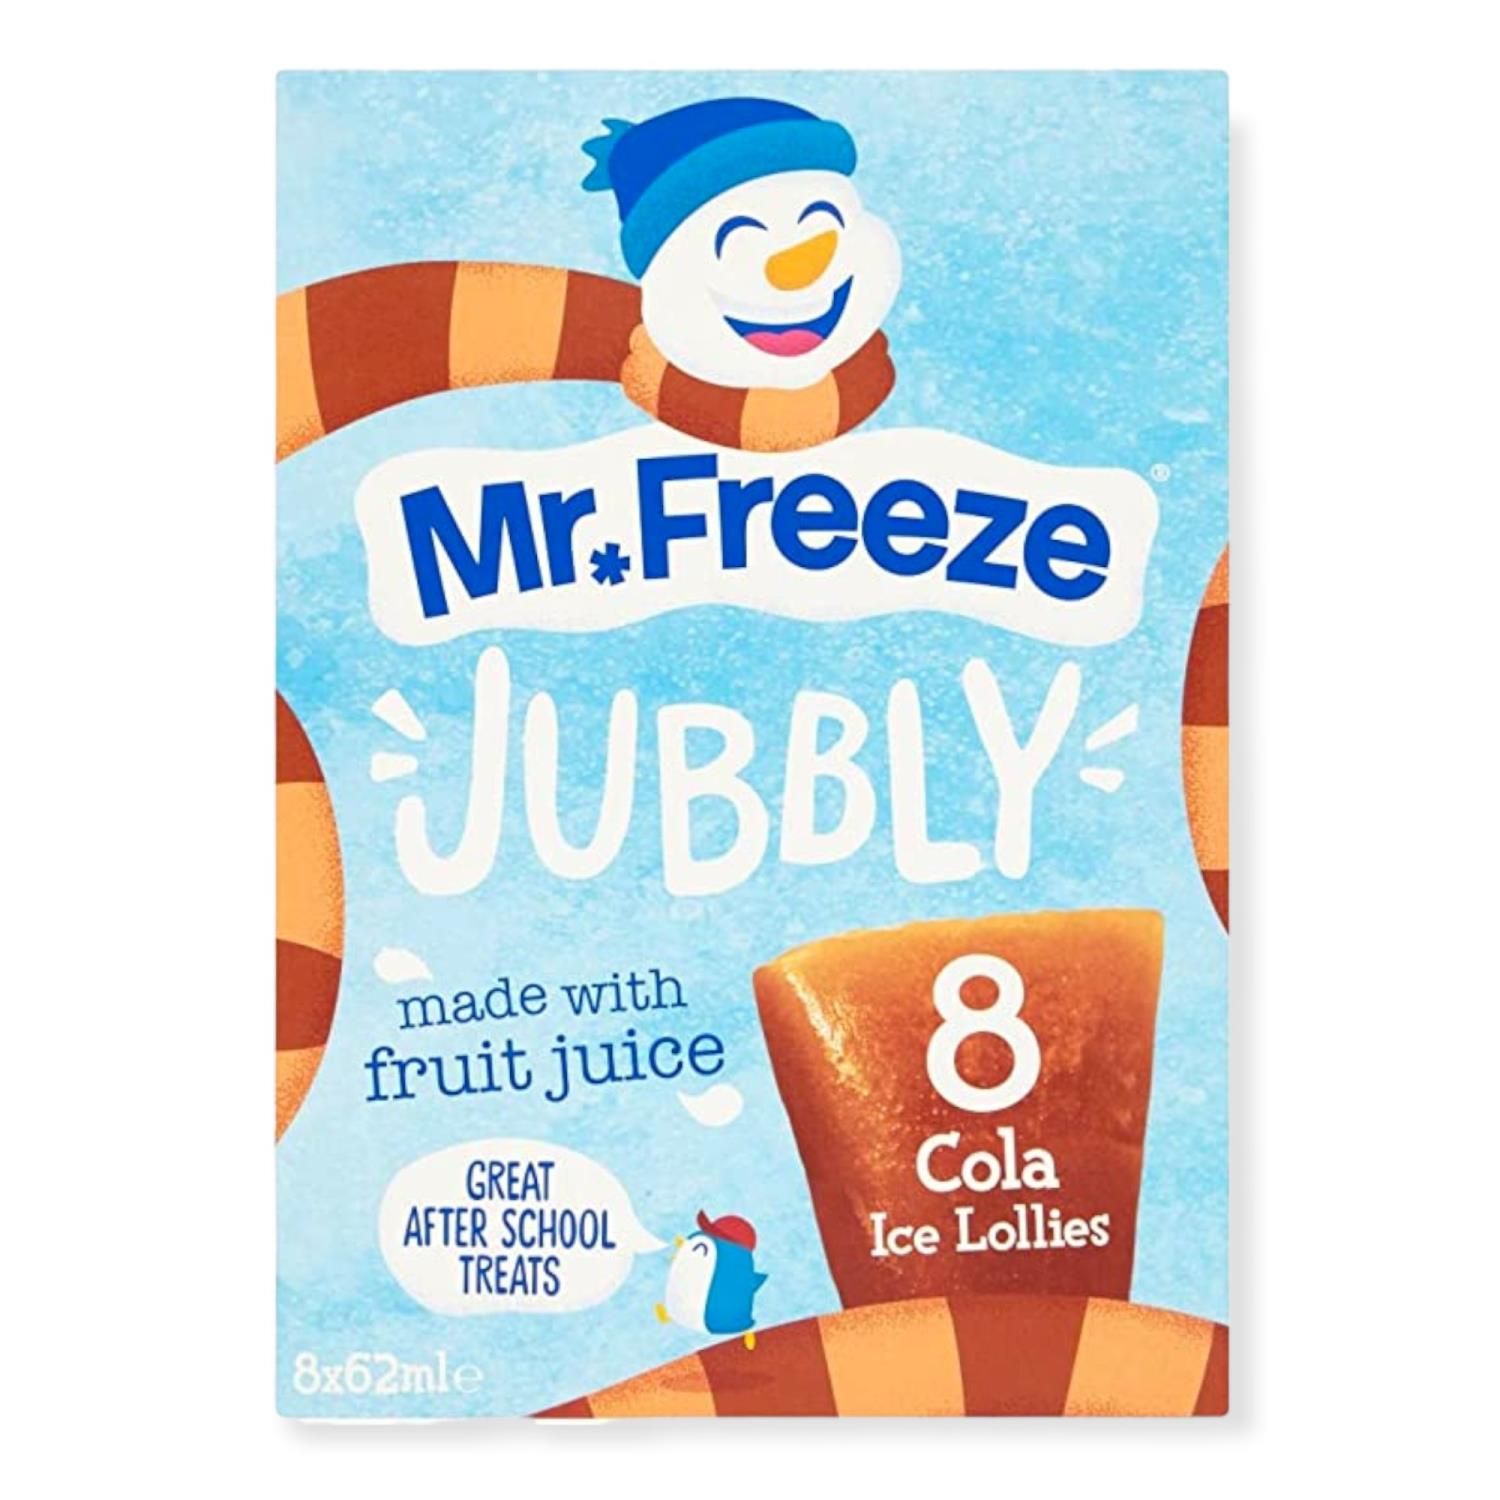 Mr.Freeze Jubbly Cola Ice Lollies 8pk